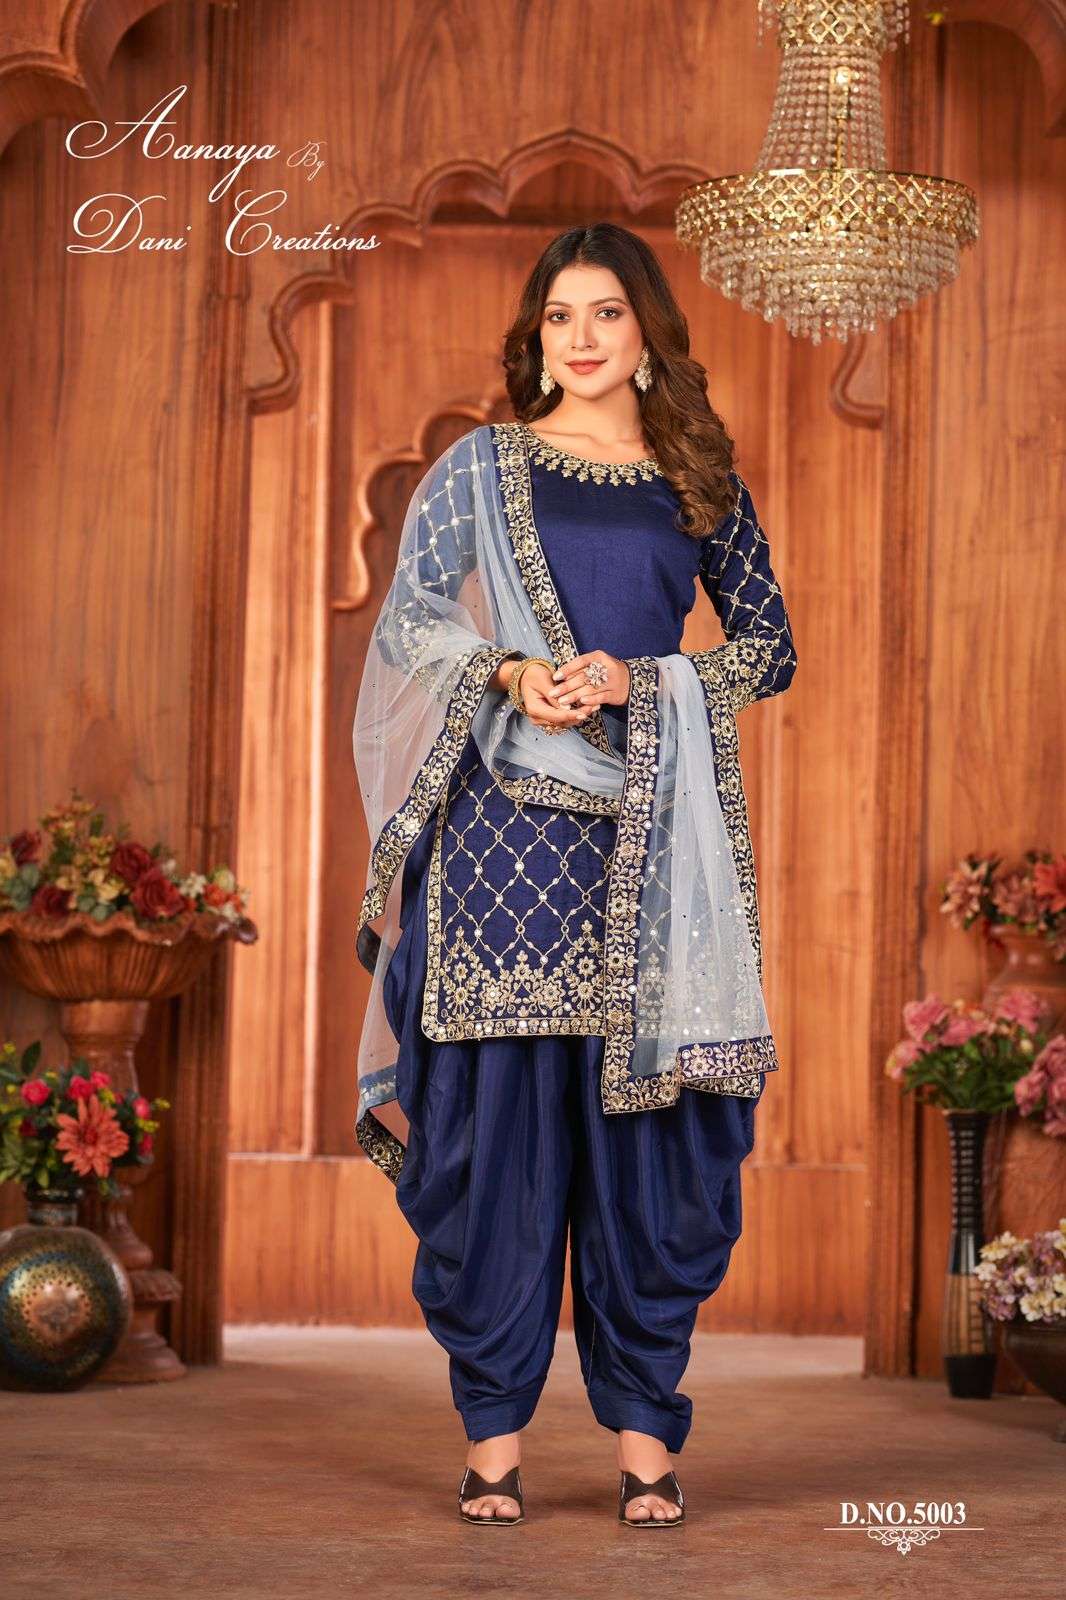 Aanaya Vol-150 By Twisha 5001 To 5004 Series Beautiful Stylish Patiyala Suits Fancy Colorful Casual Wear & Ethnic Wear & Ready To Wear Art Silk Dresses At Wholesale Price